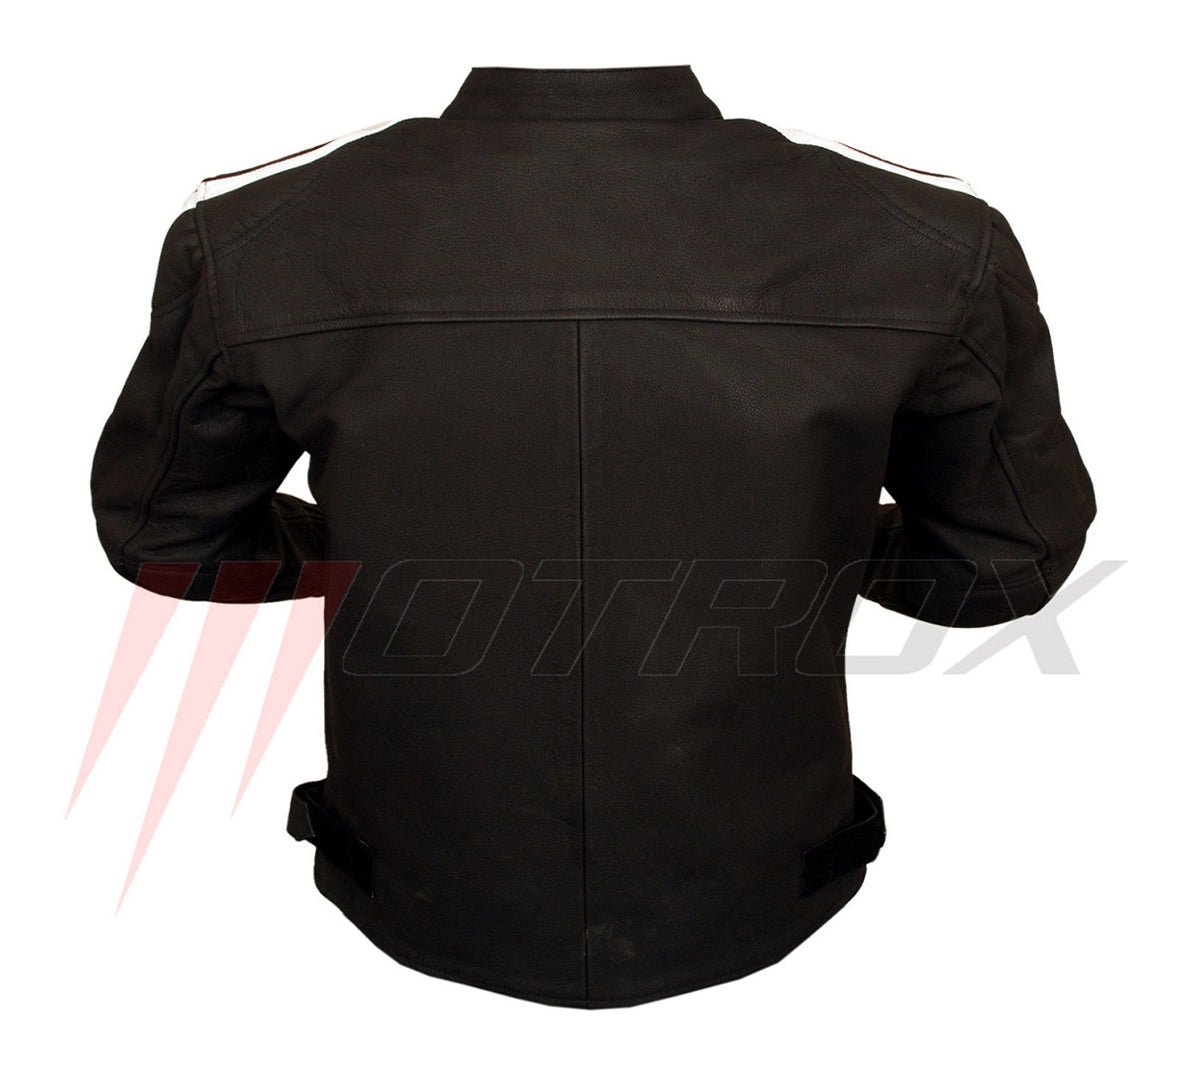 Motrox Motorcycle Leather Jacket Authentic style 8